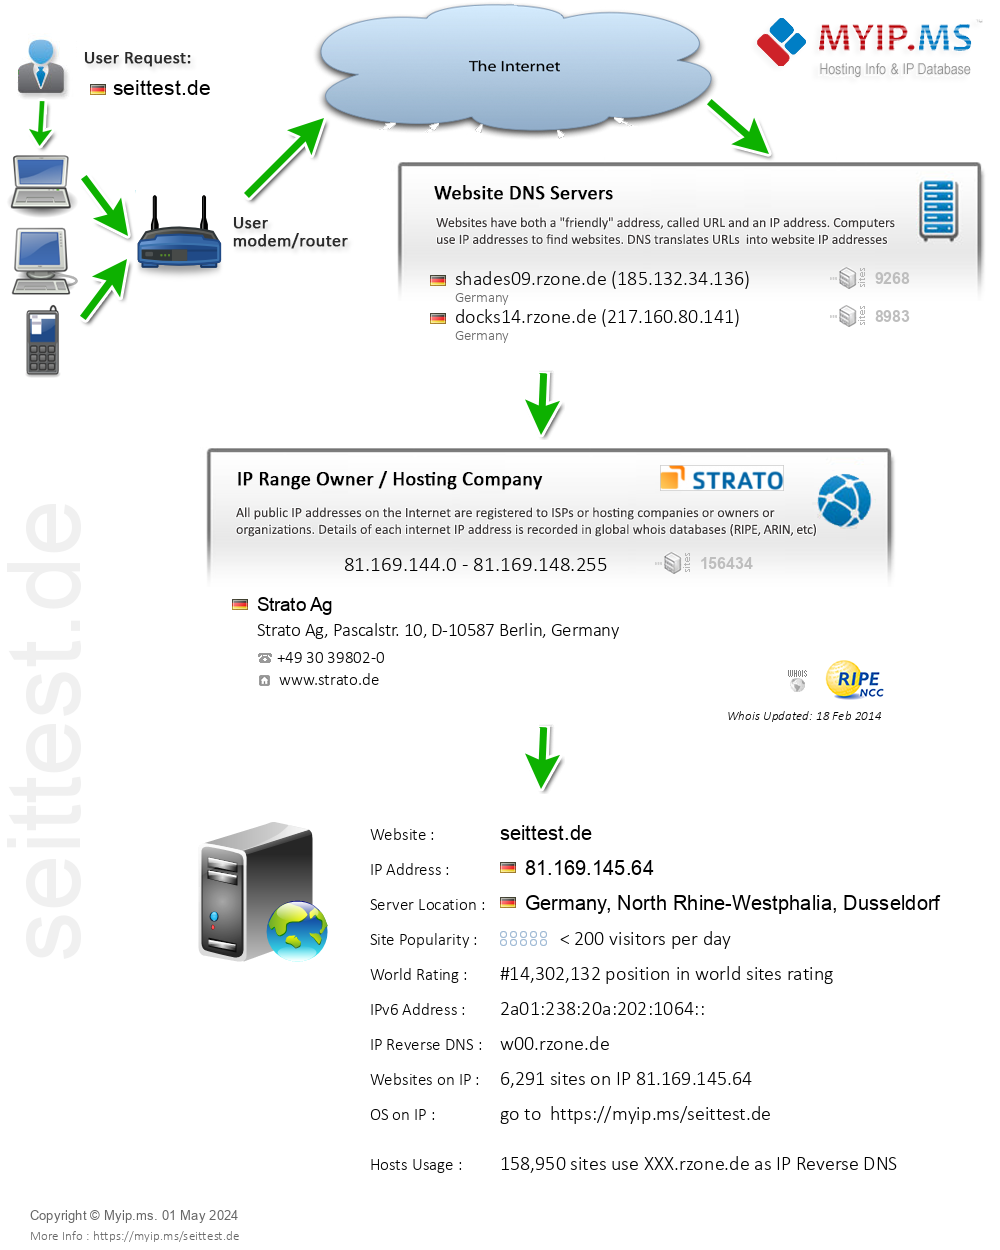 Seittest.de - Website Hosting Visual IP Diagram